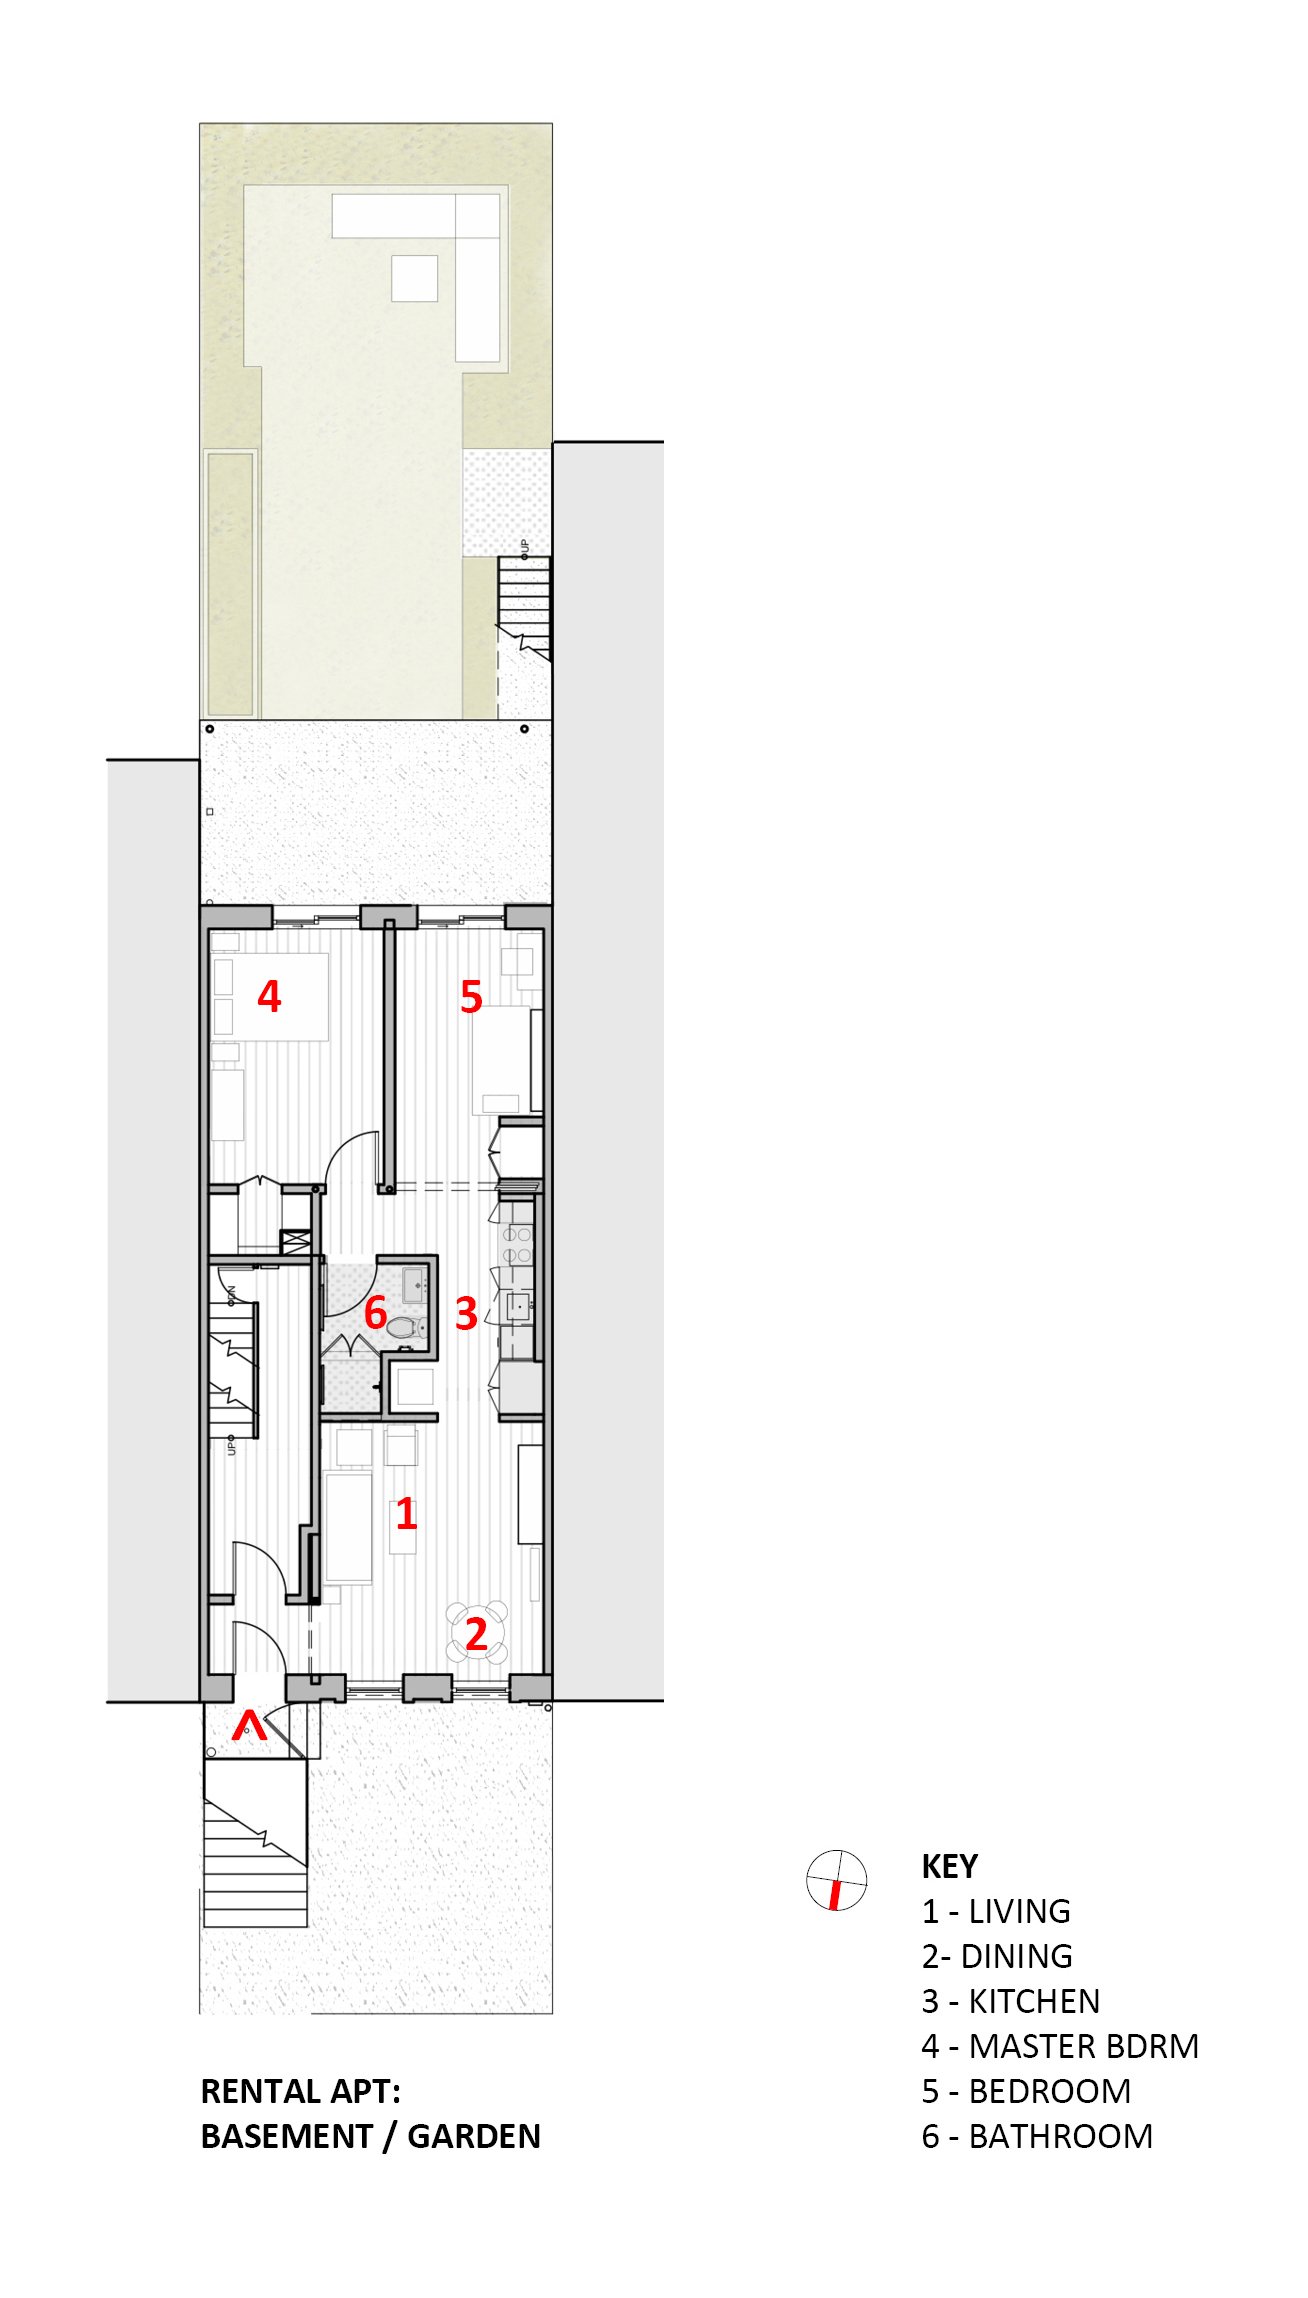 07_basement - plan.jpg